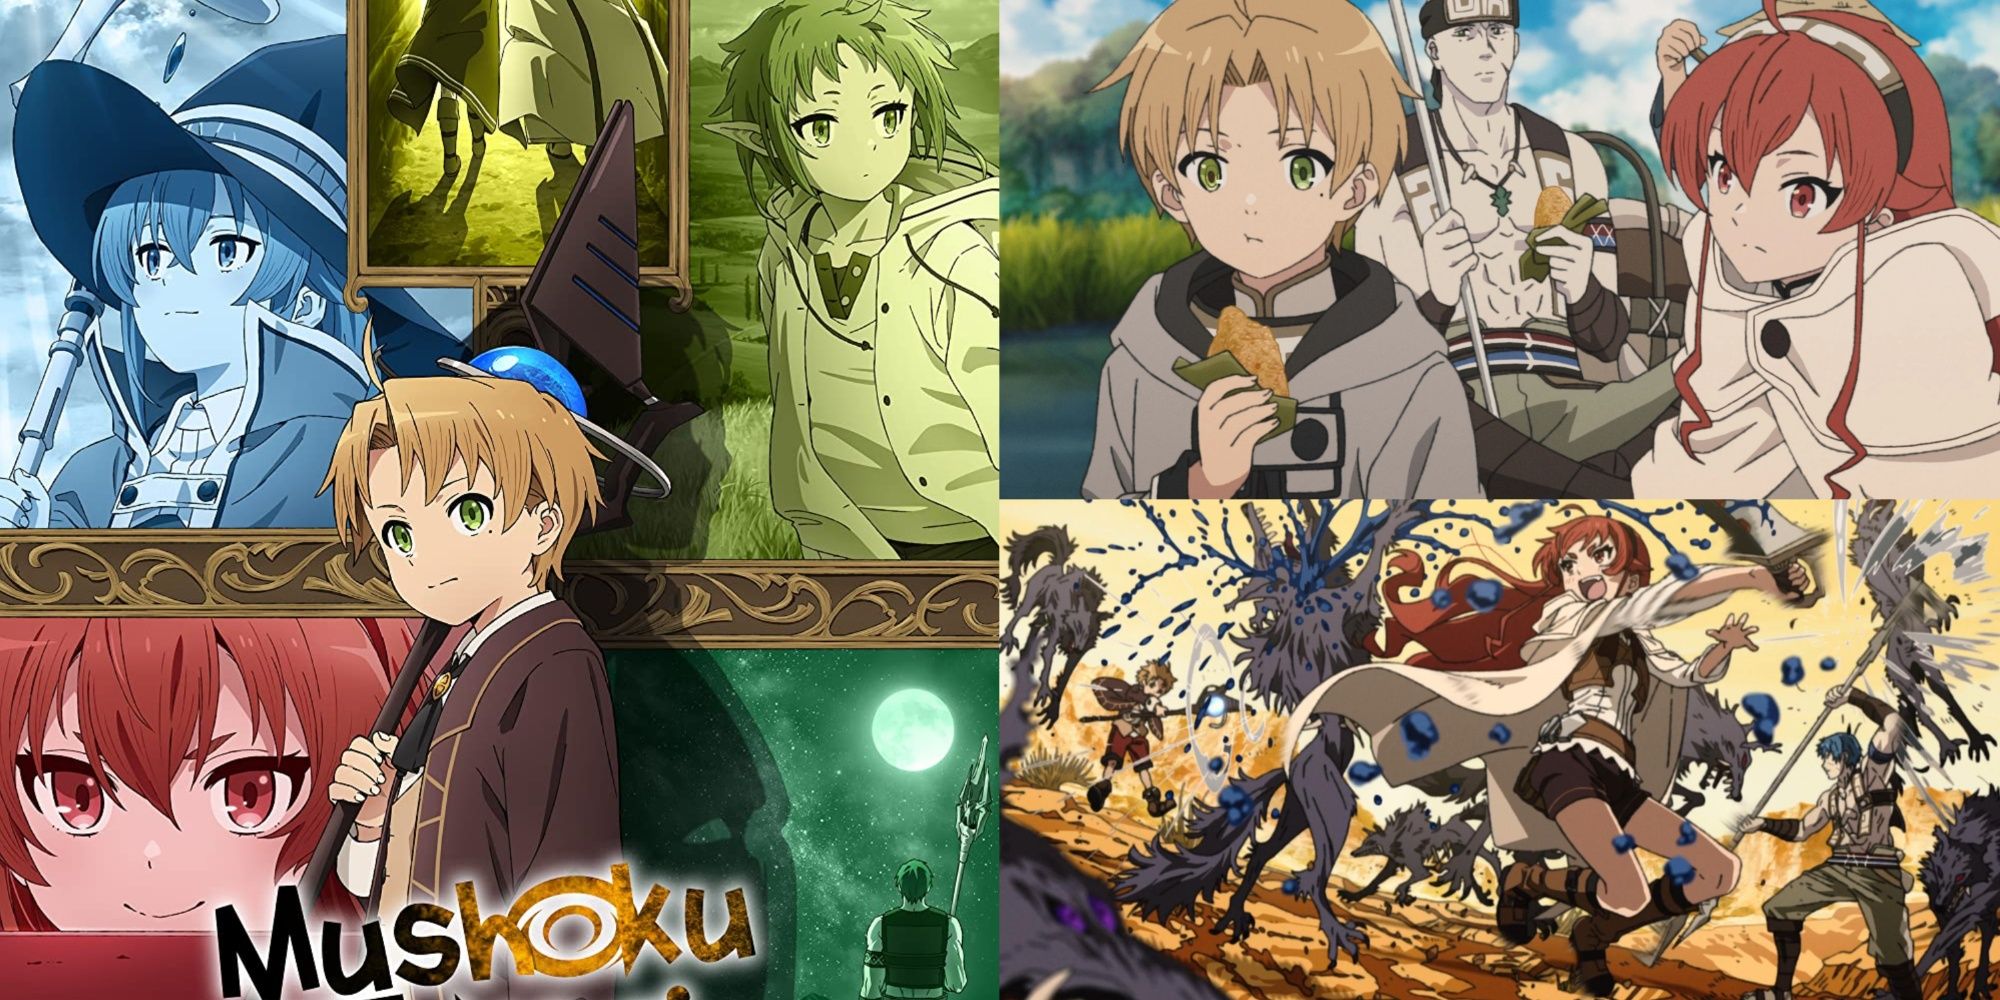 Eris, Rudeus and other Mushoku characters